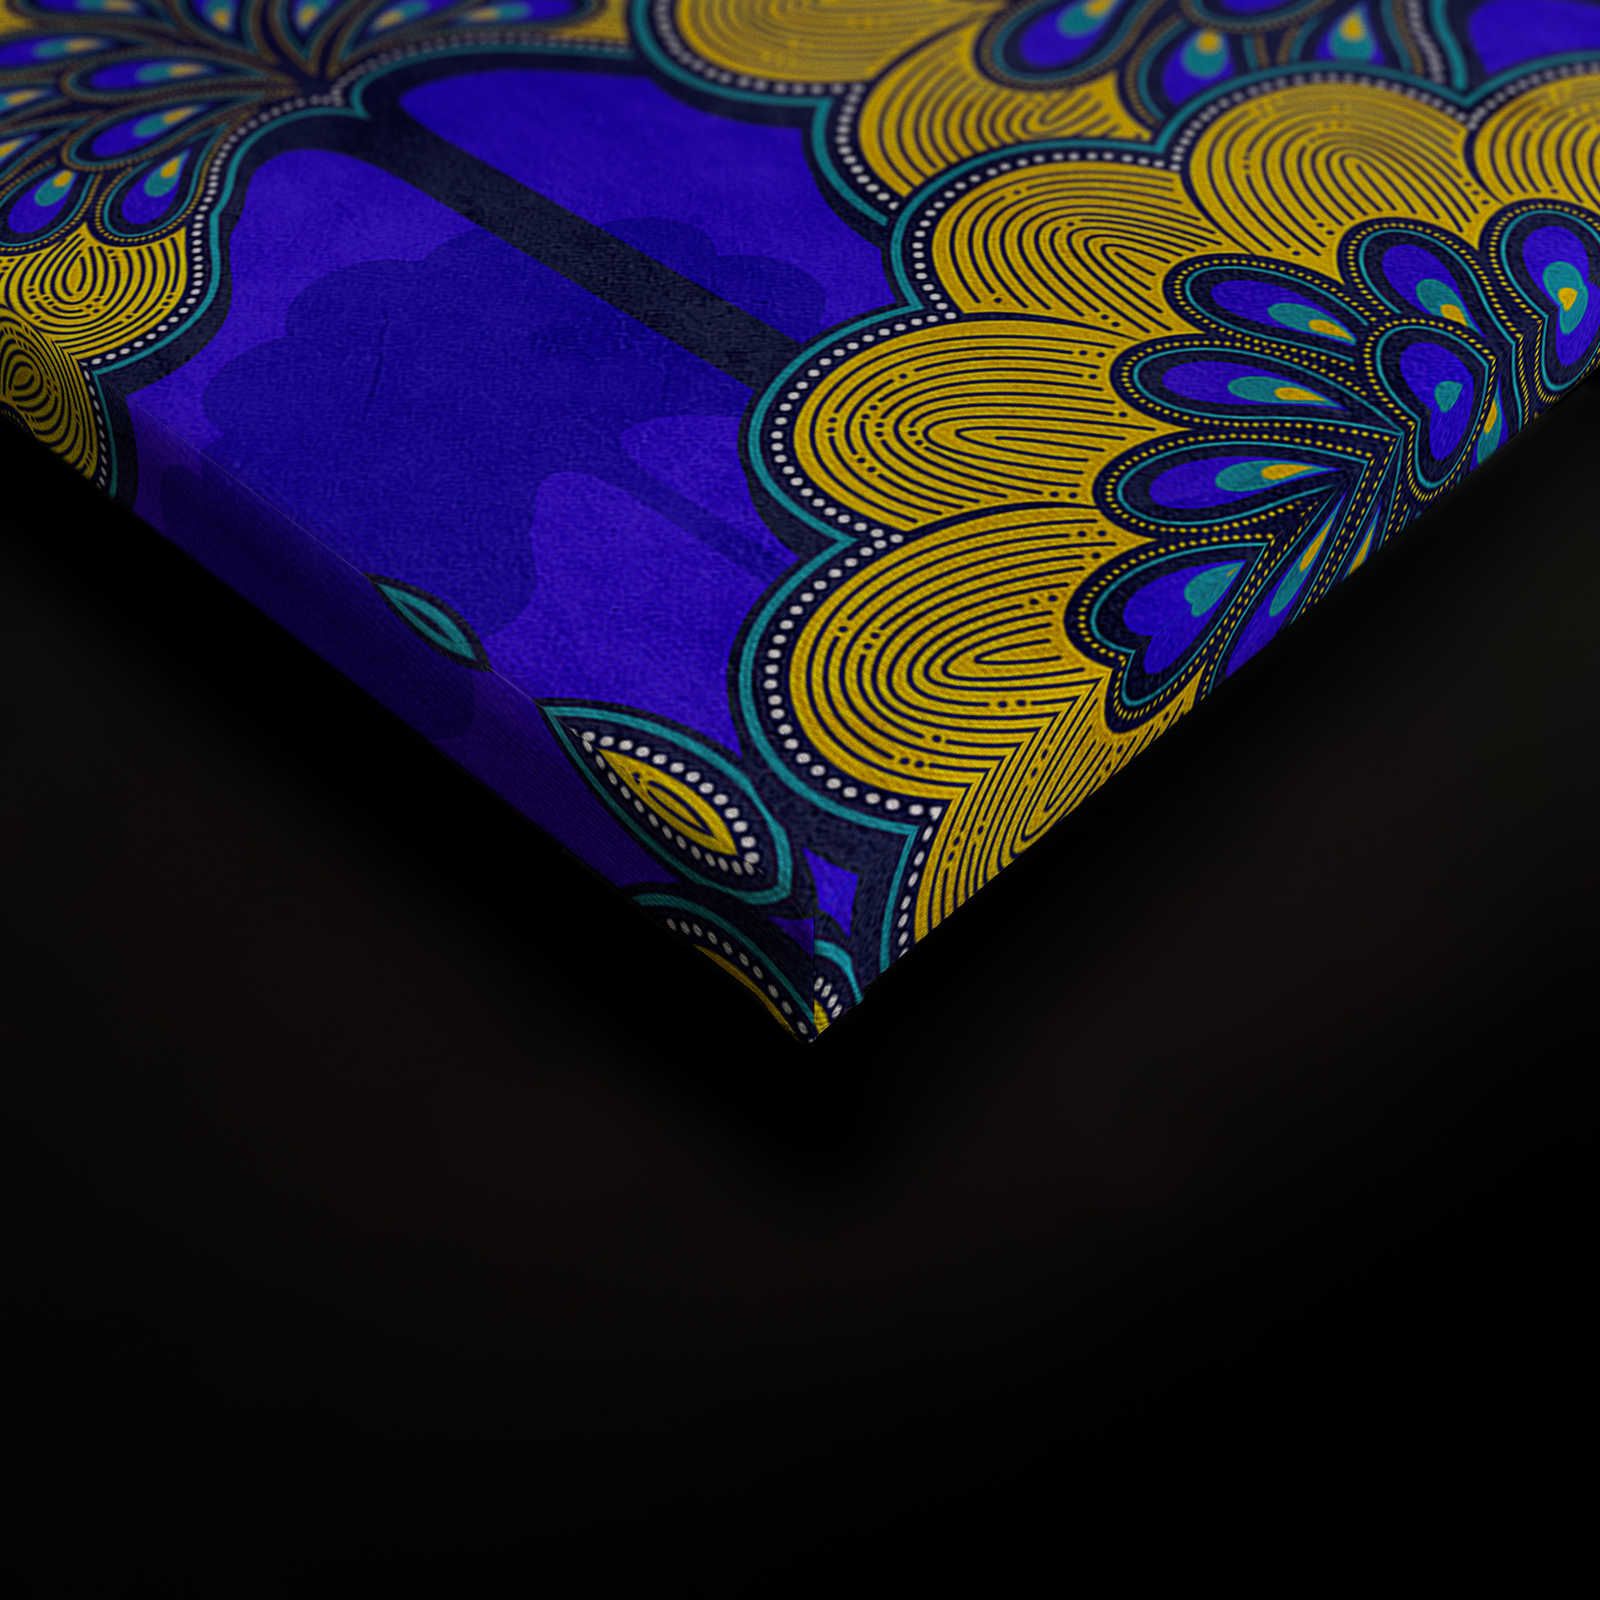             Dakar 1 - Canvas painting African Textile Pattern Blue & Yellow - 0,90 m x 0,60 m
        